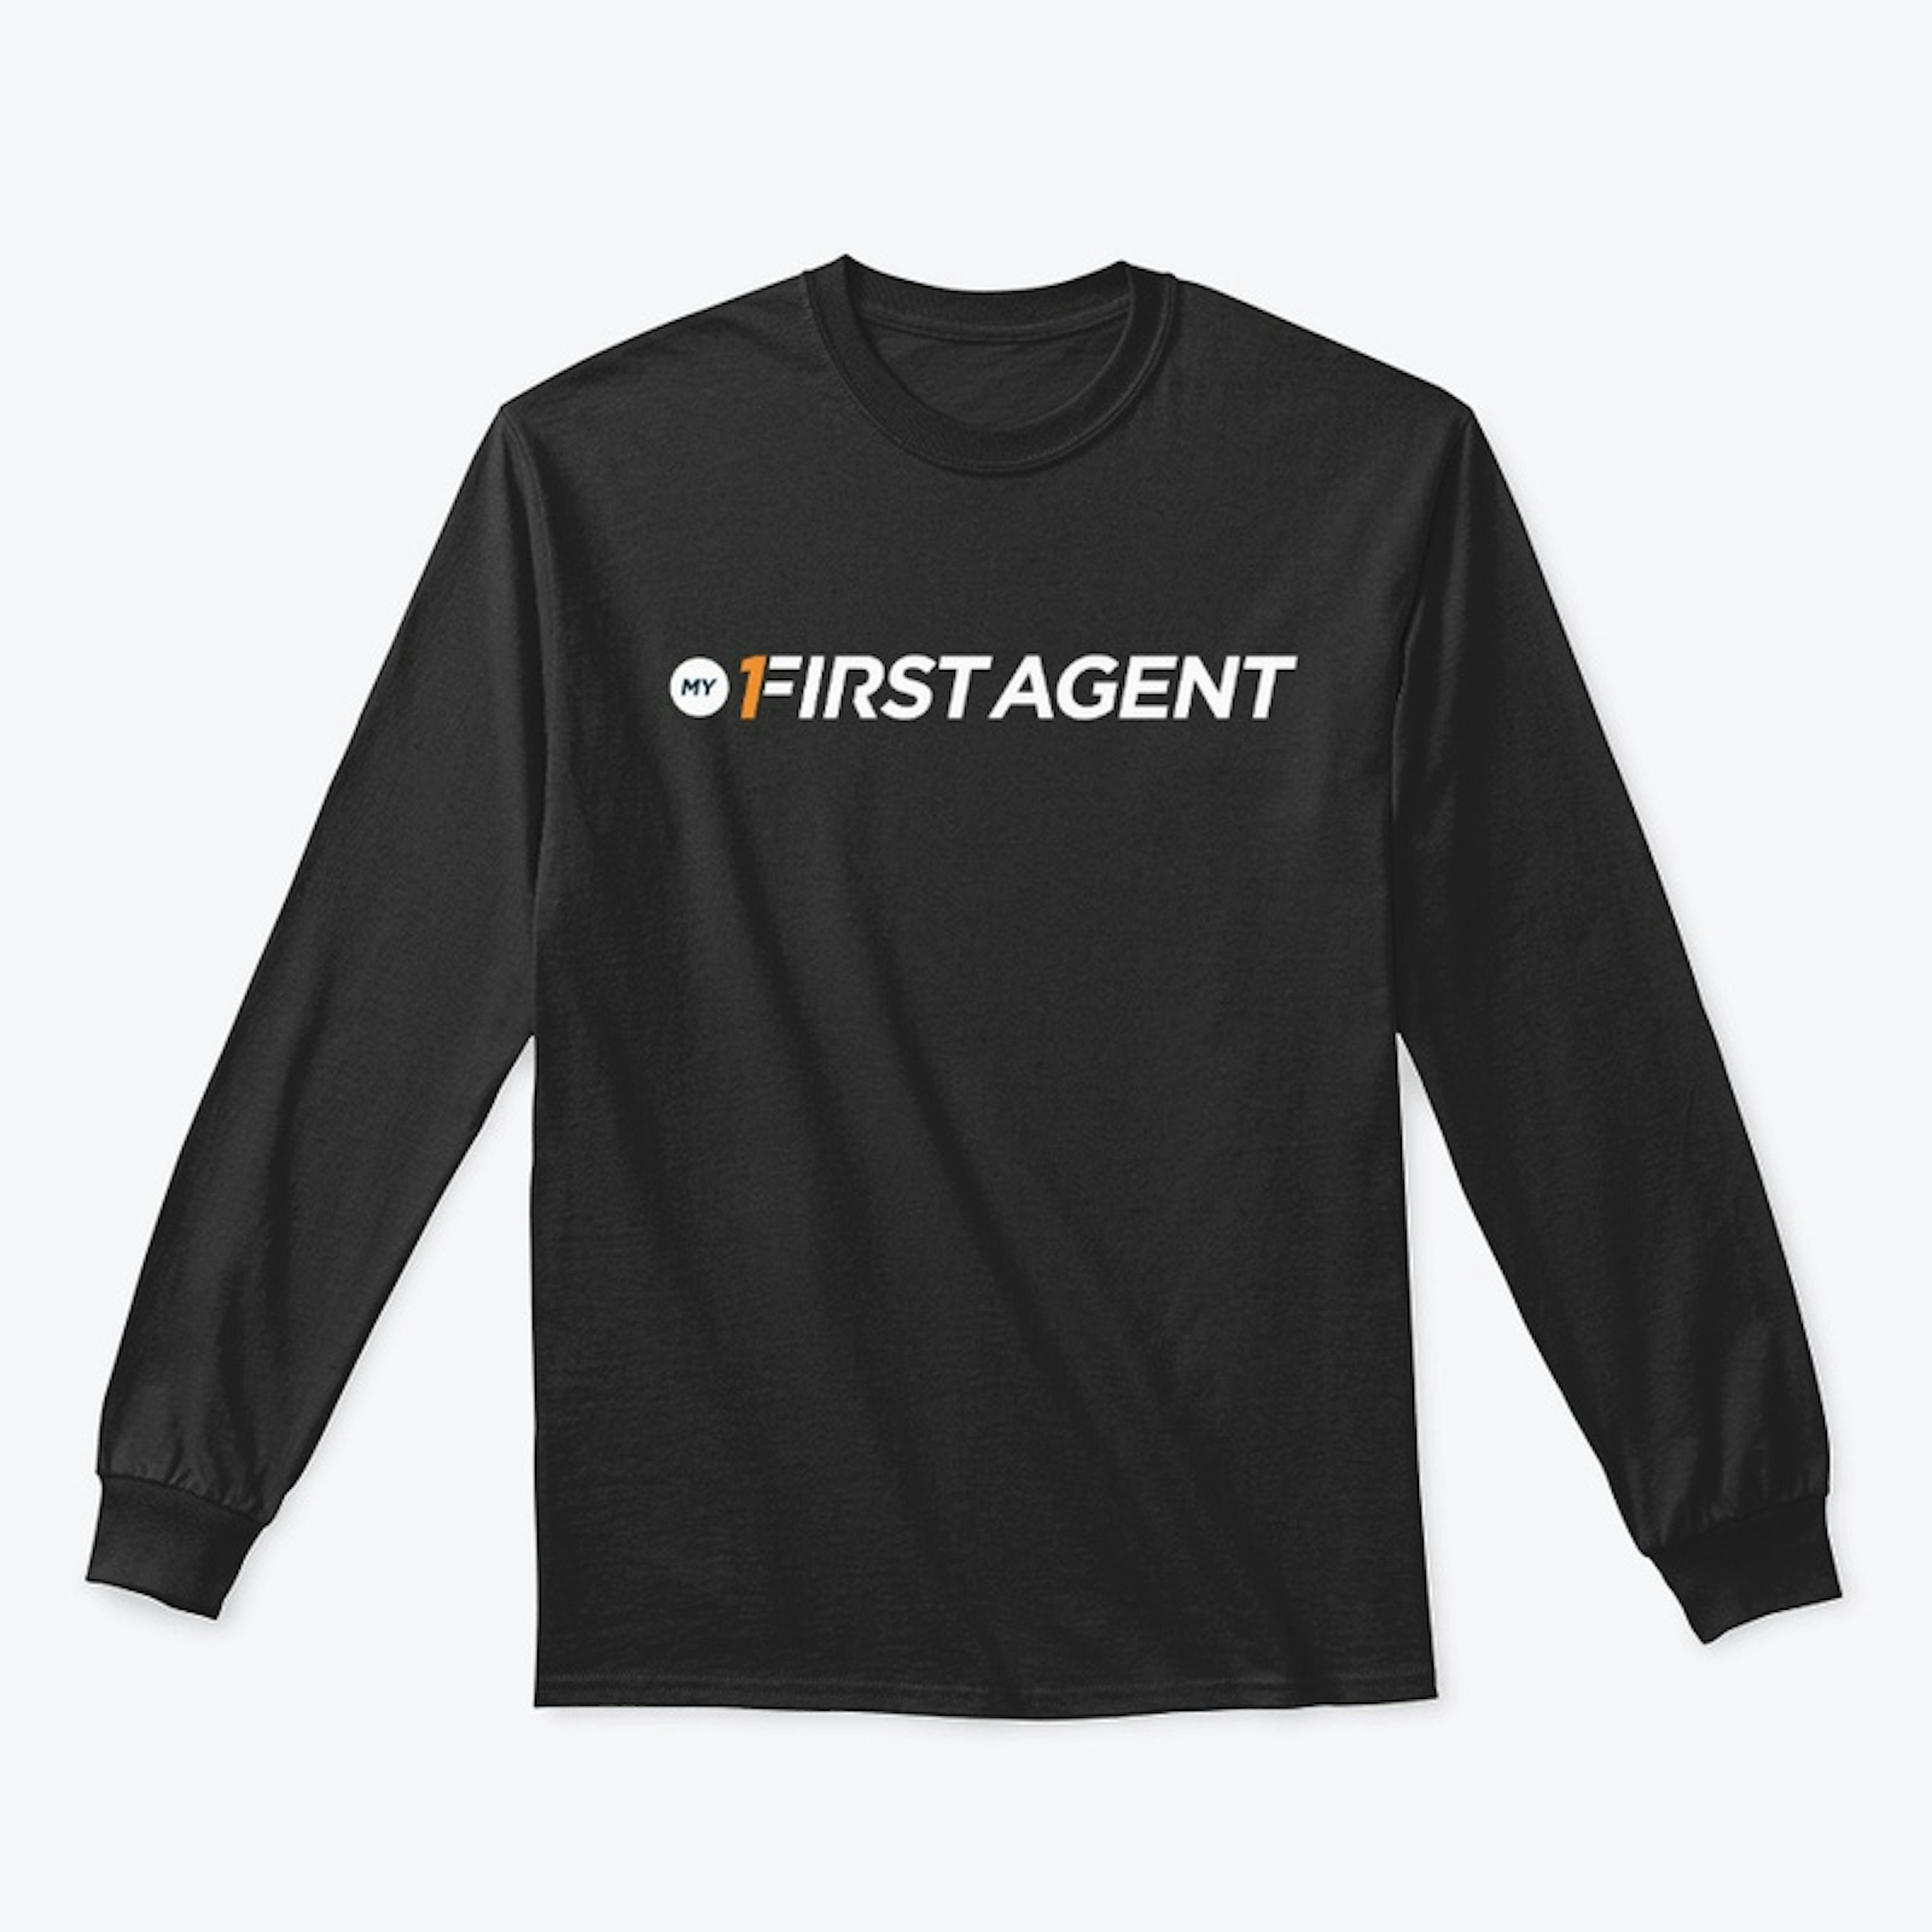 My First Agent Brand